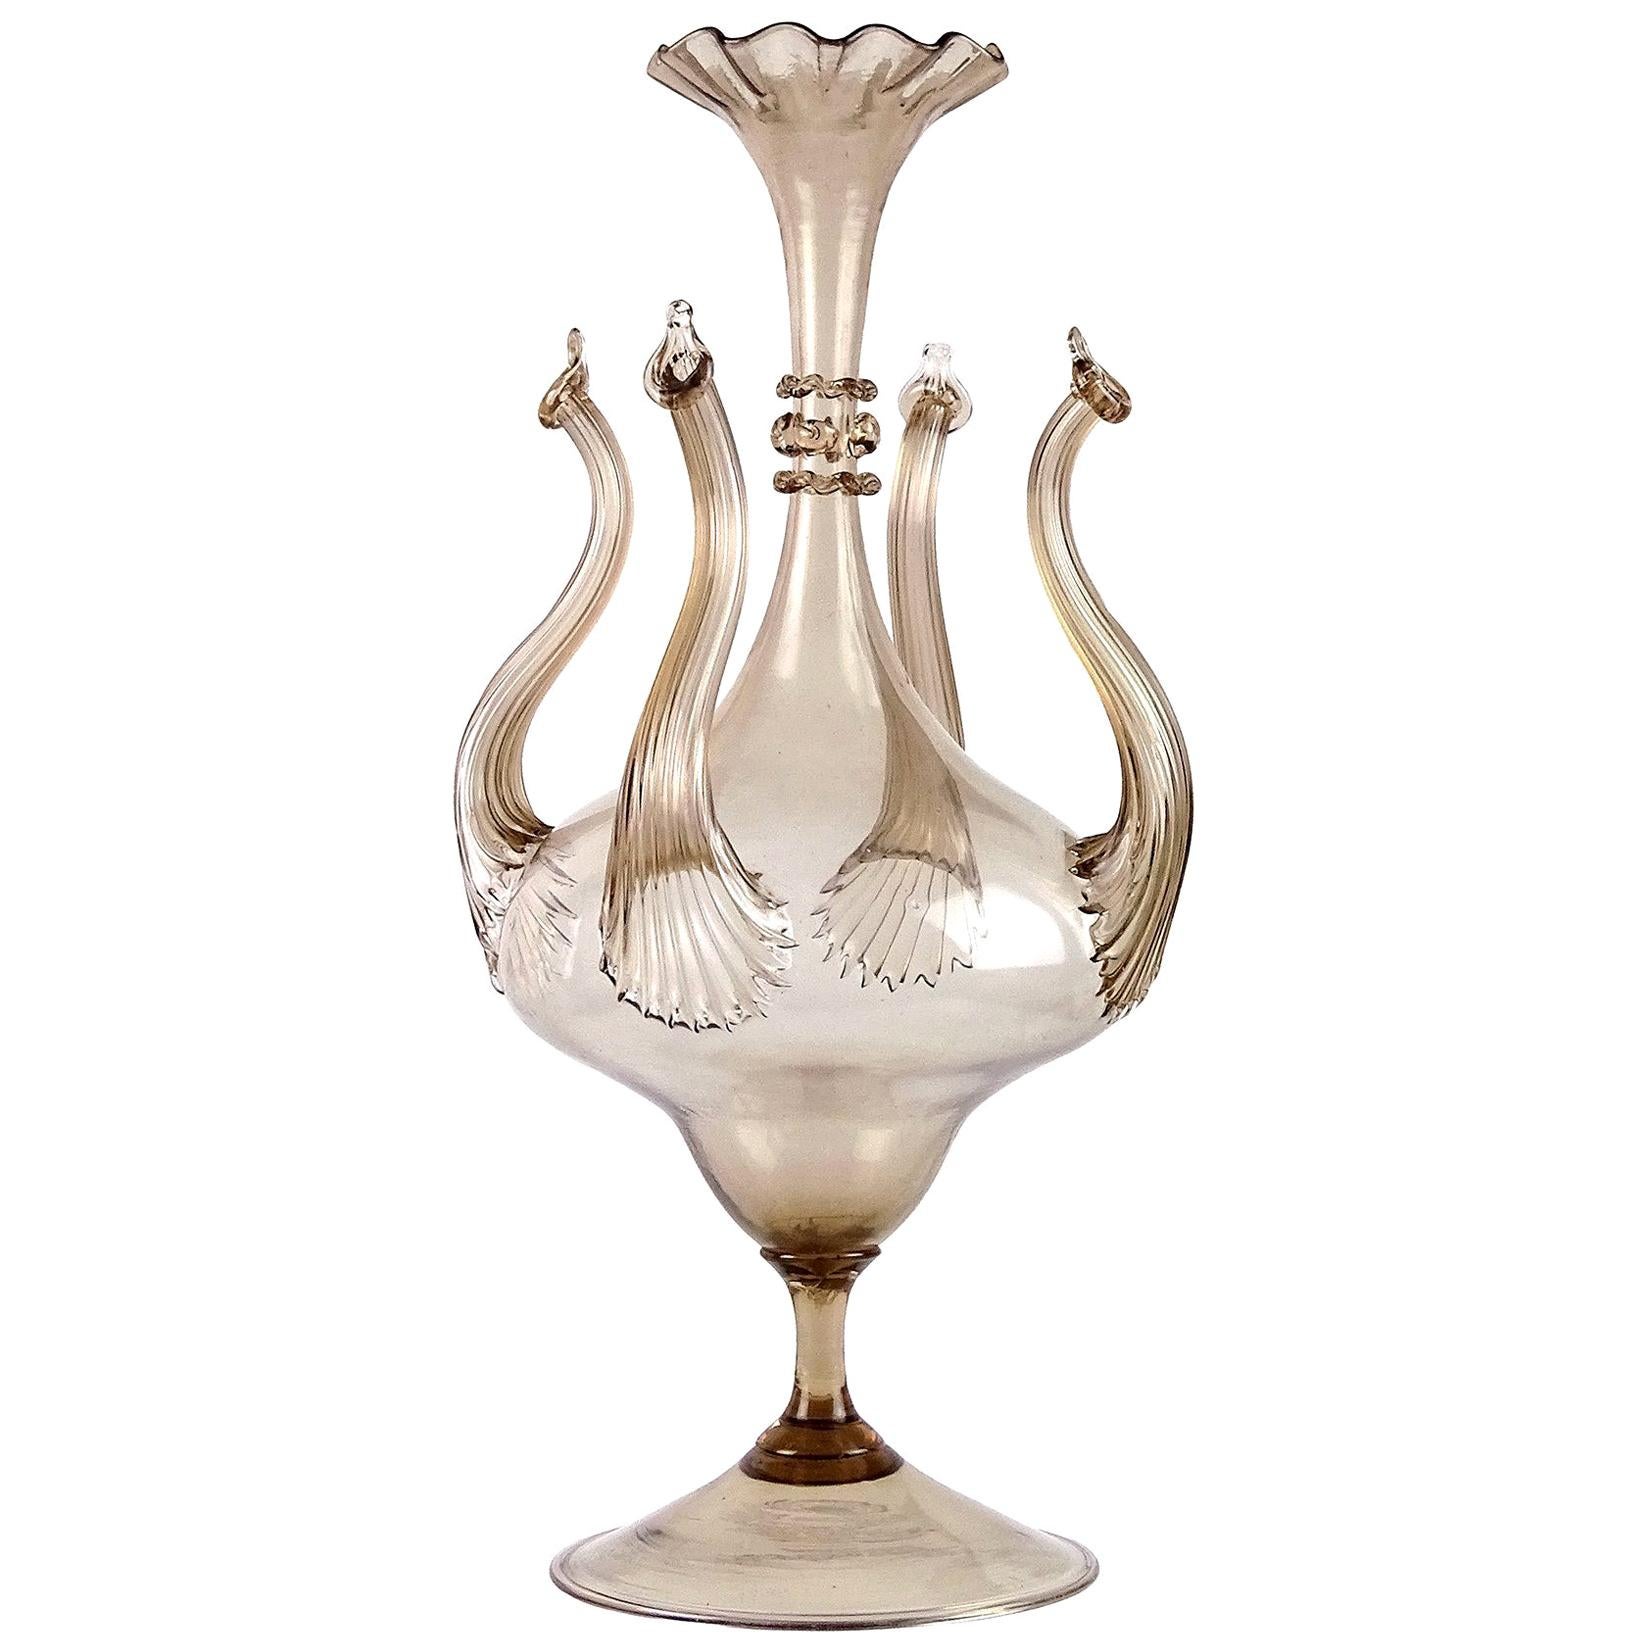 Reserved for Corrado - Venetian Items, Cartier Ram, Barovier Bowl-Vase